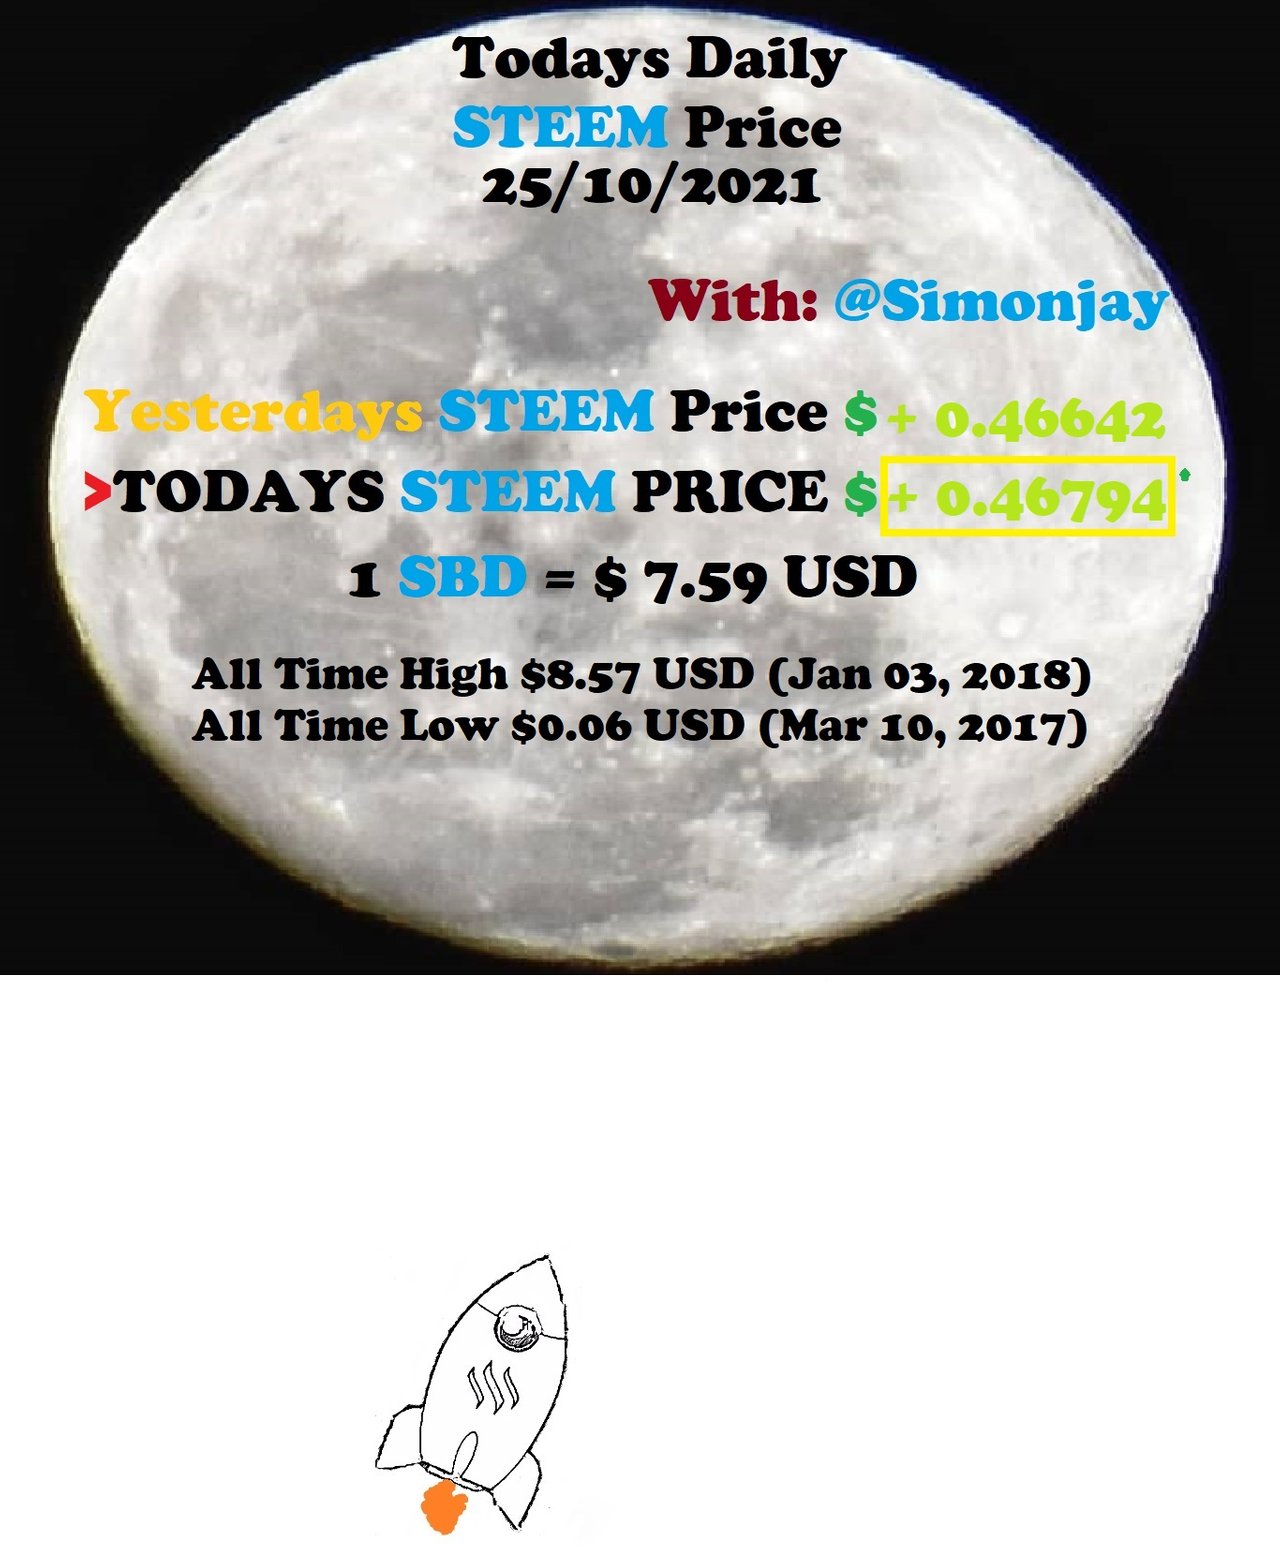 Steem Daily Price MoonTemplate25102021.jpg